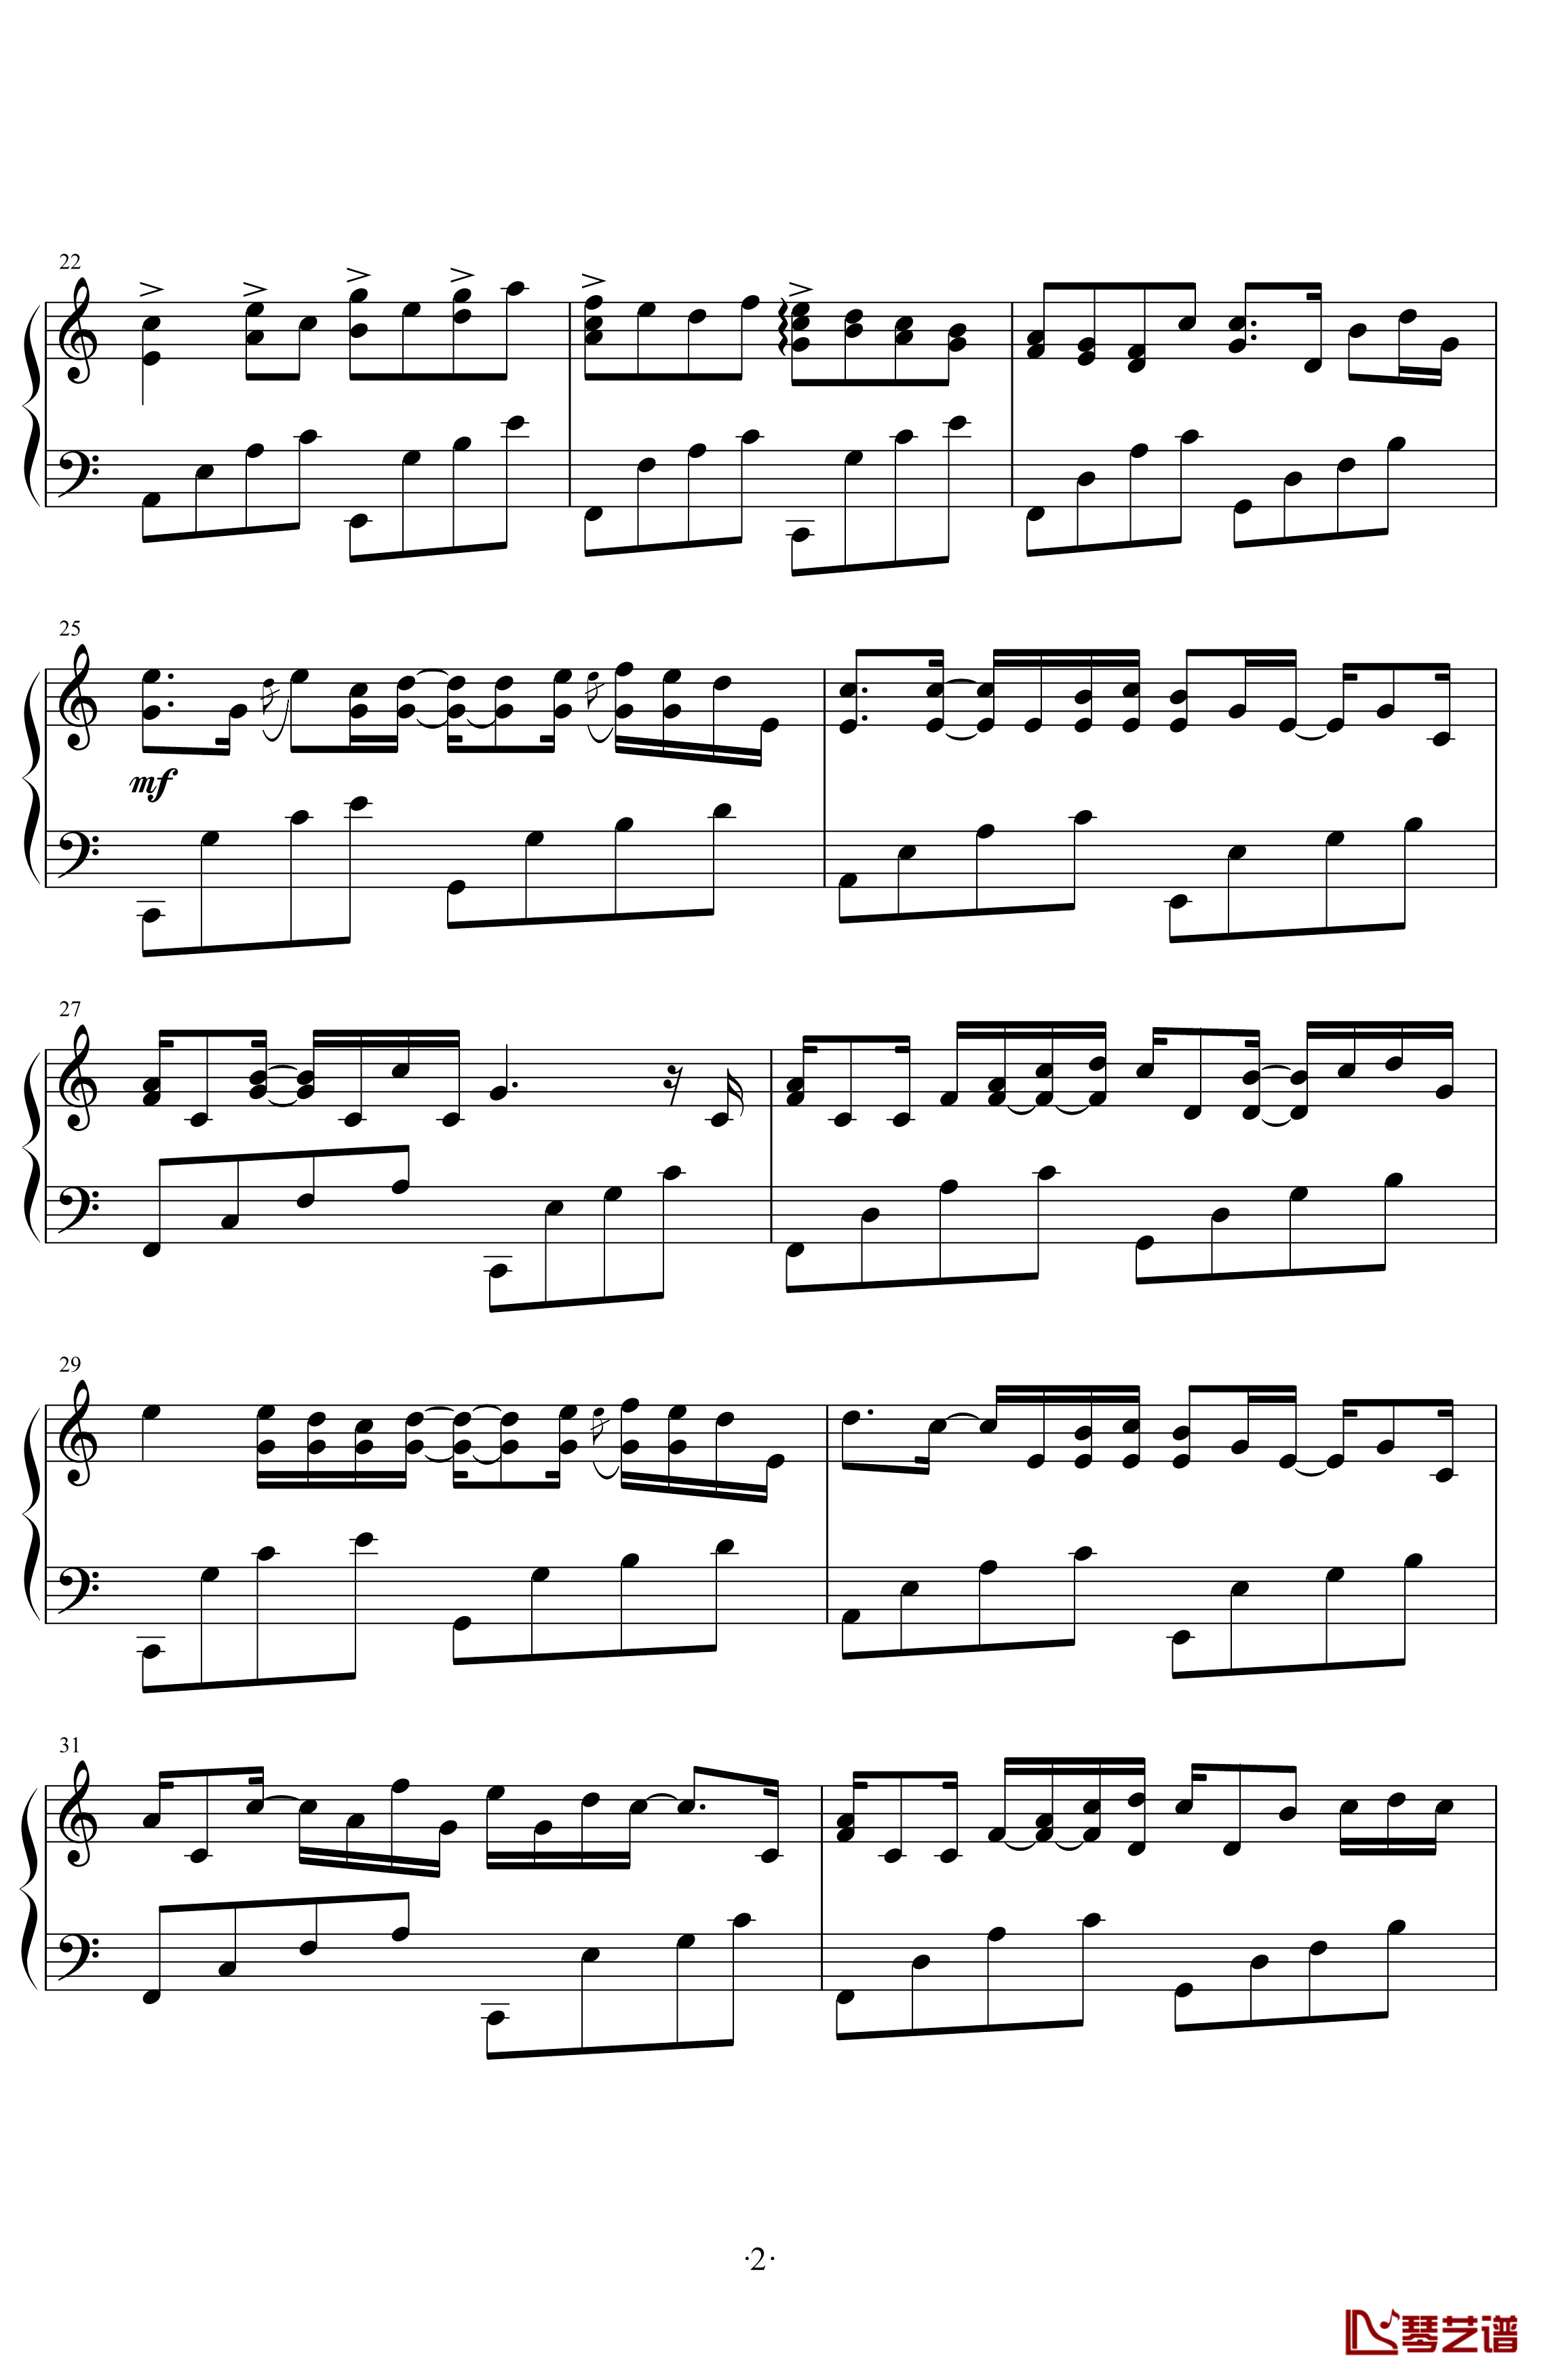 卡农变奏曲钢琴谱-Variations on the Canon by Pachelbel V.L.最终定本-George Winston2